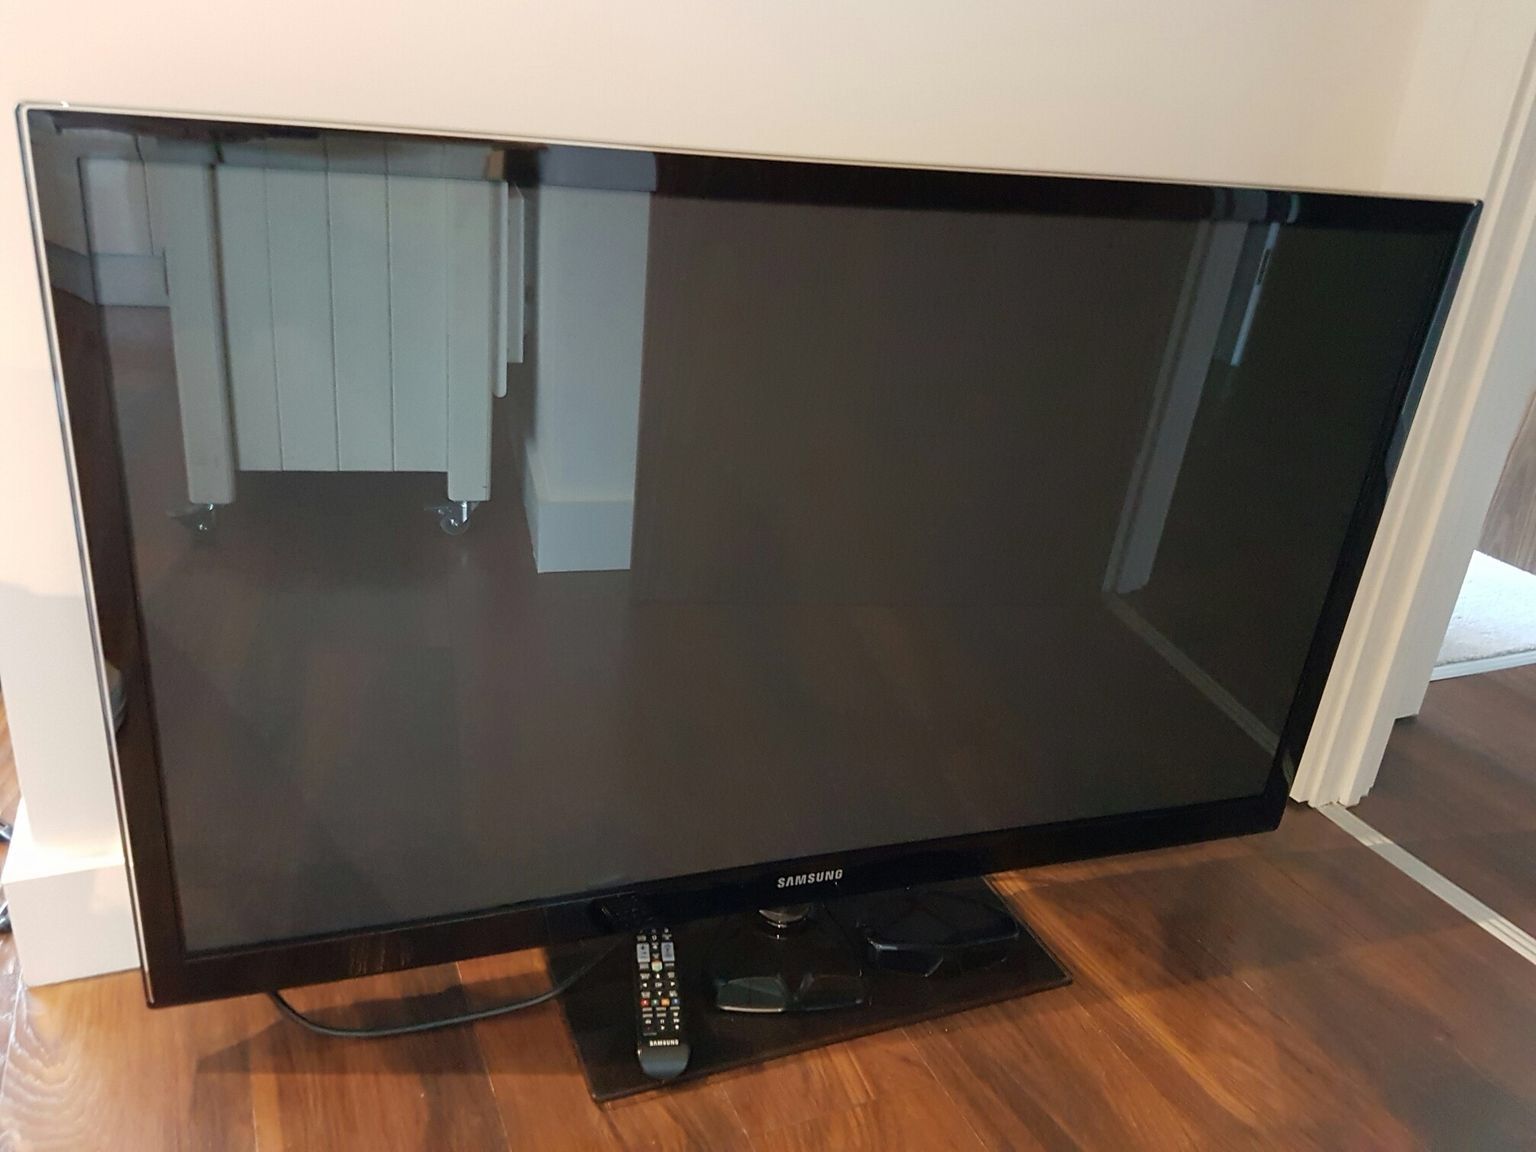 Samsung 55 inch plasma tv